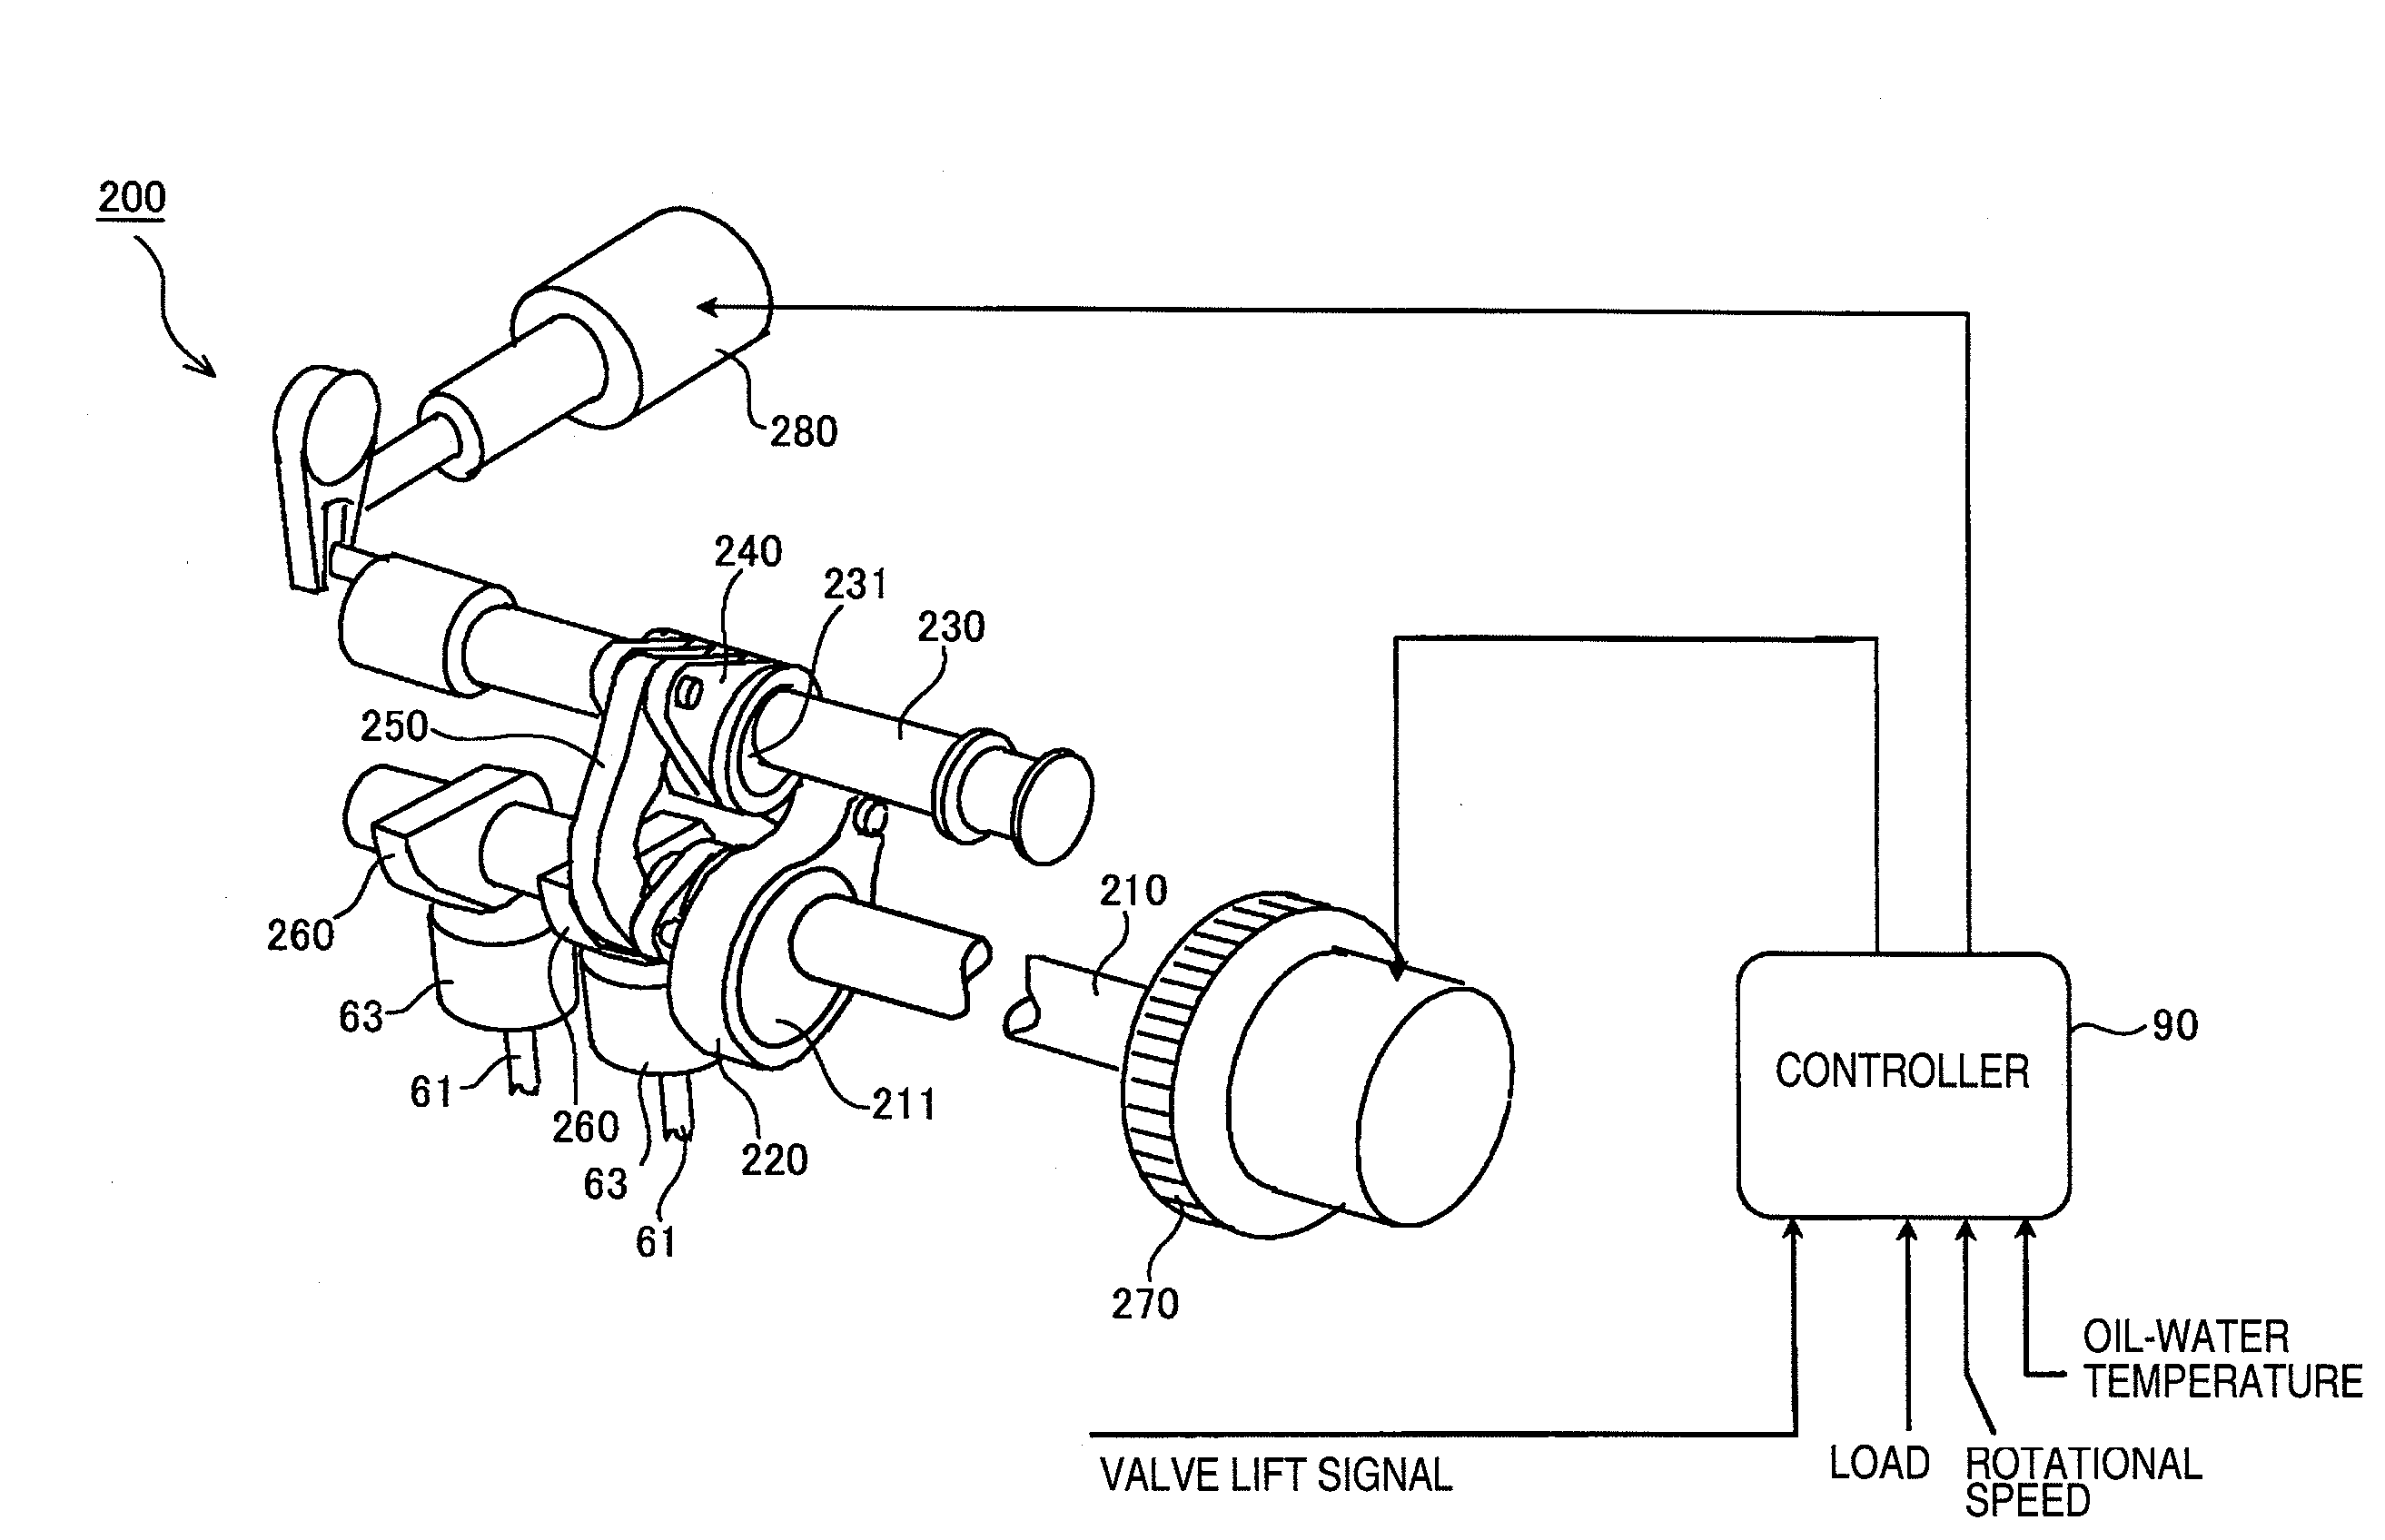 Engine control apparatus and method